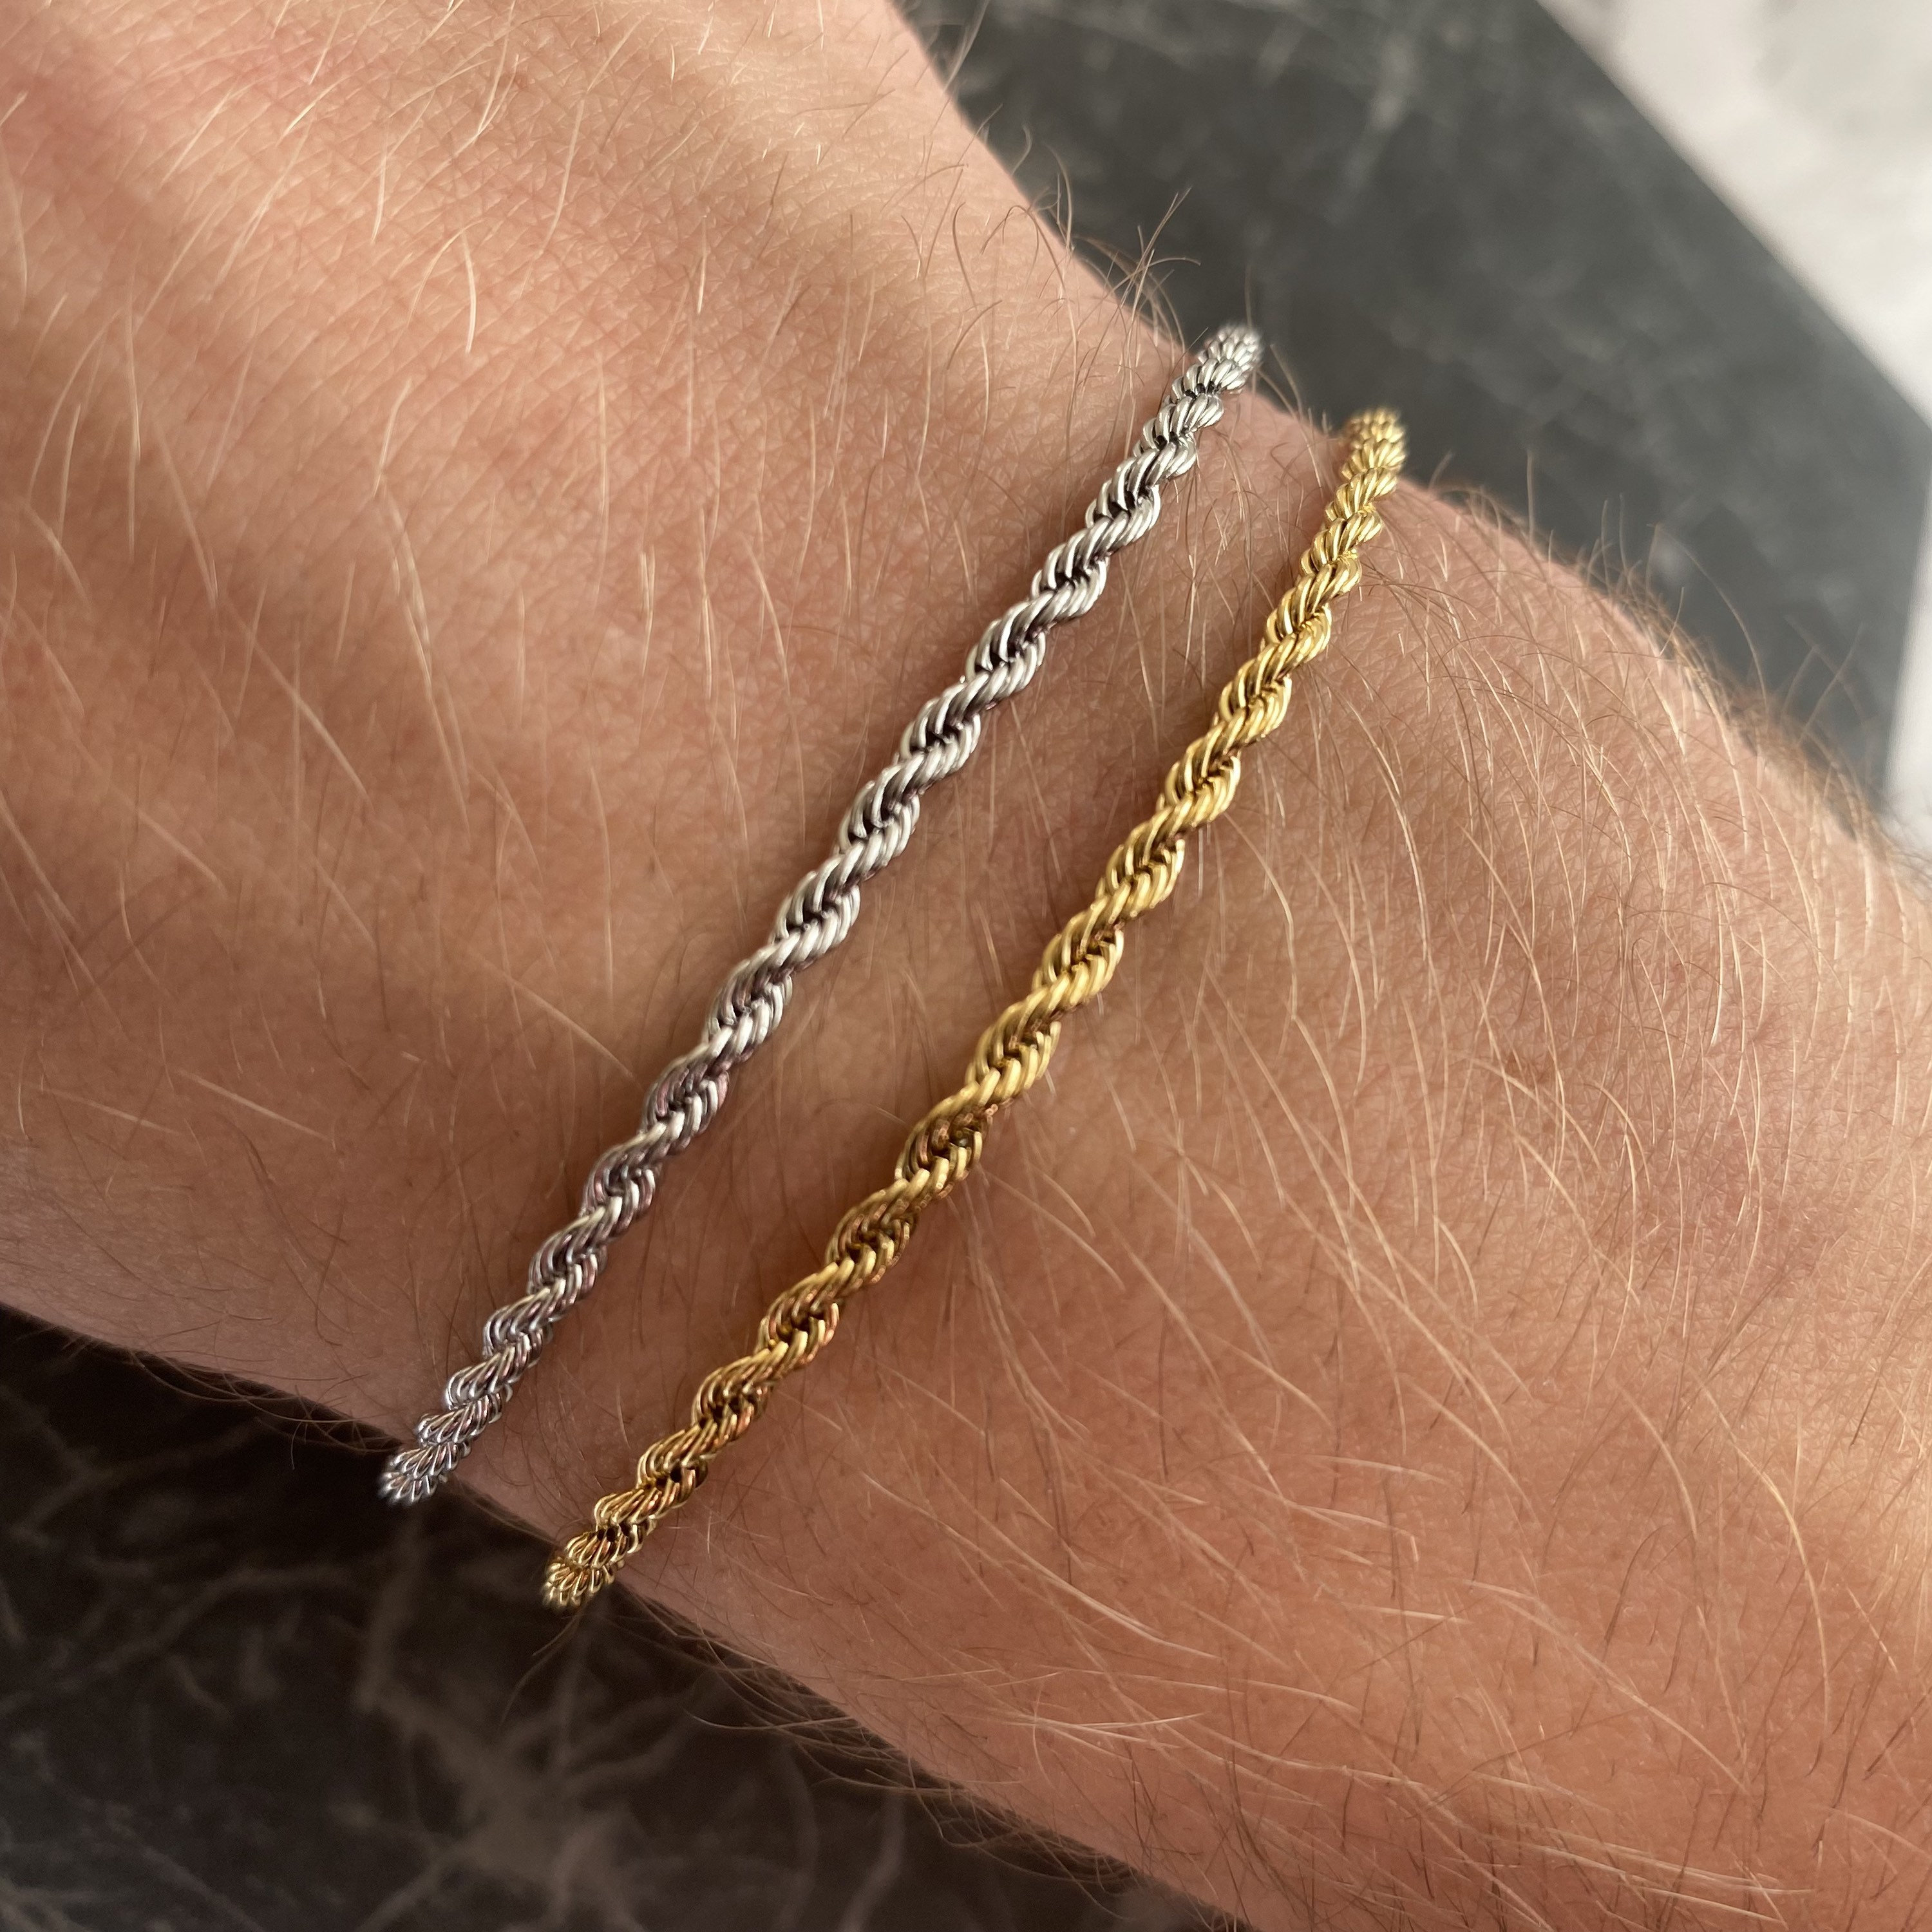  Galis Rope Bracelet For Men - Premium Stainless Steel